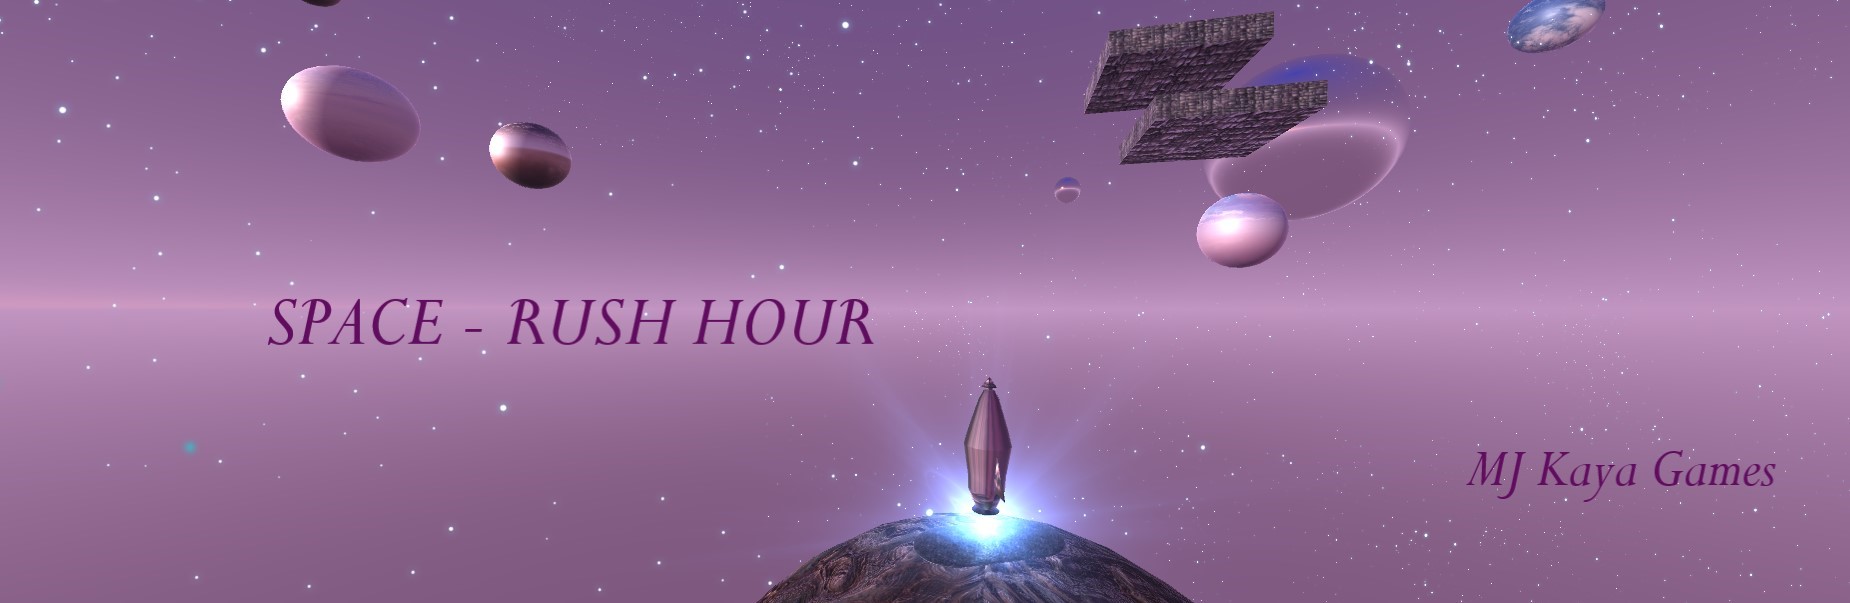 Space - Rush Hour